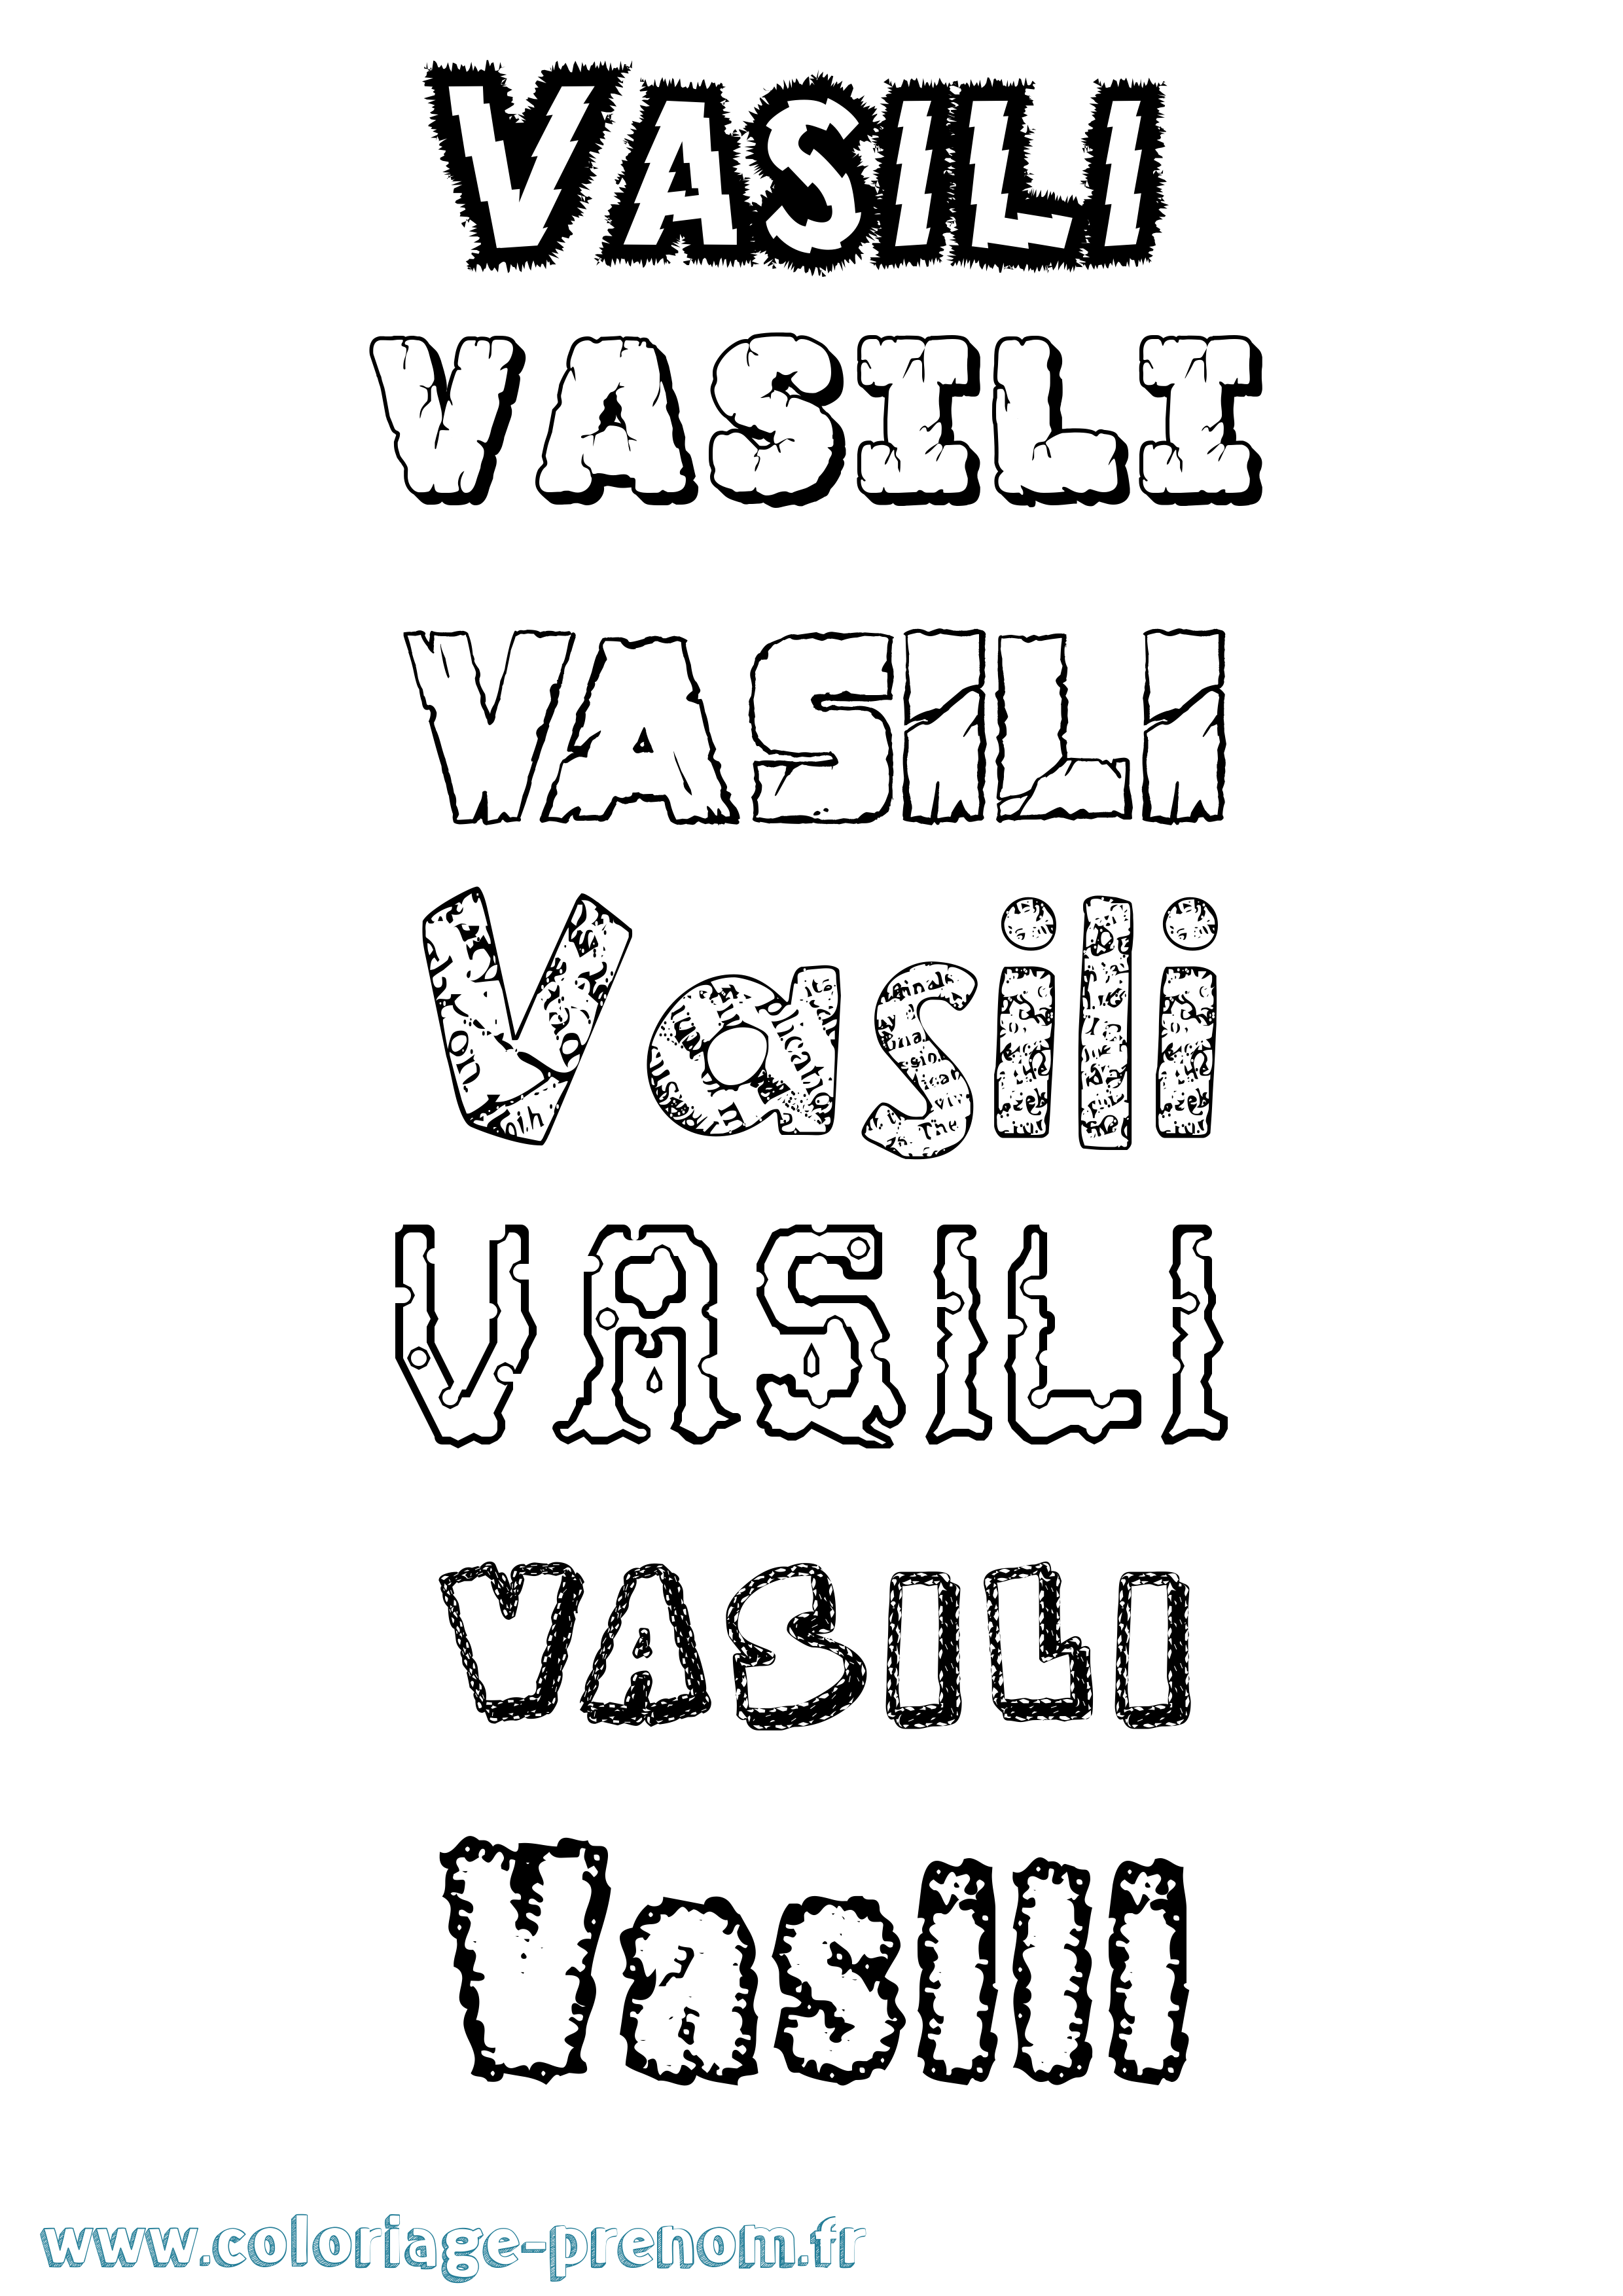 Coloriage prénom Vasili Destructuré